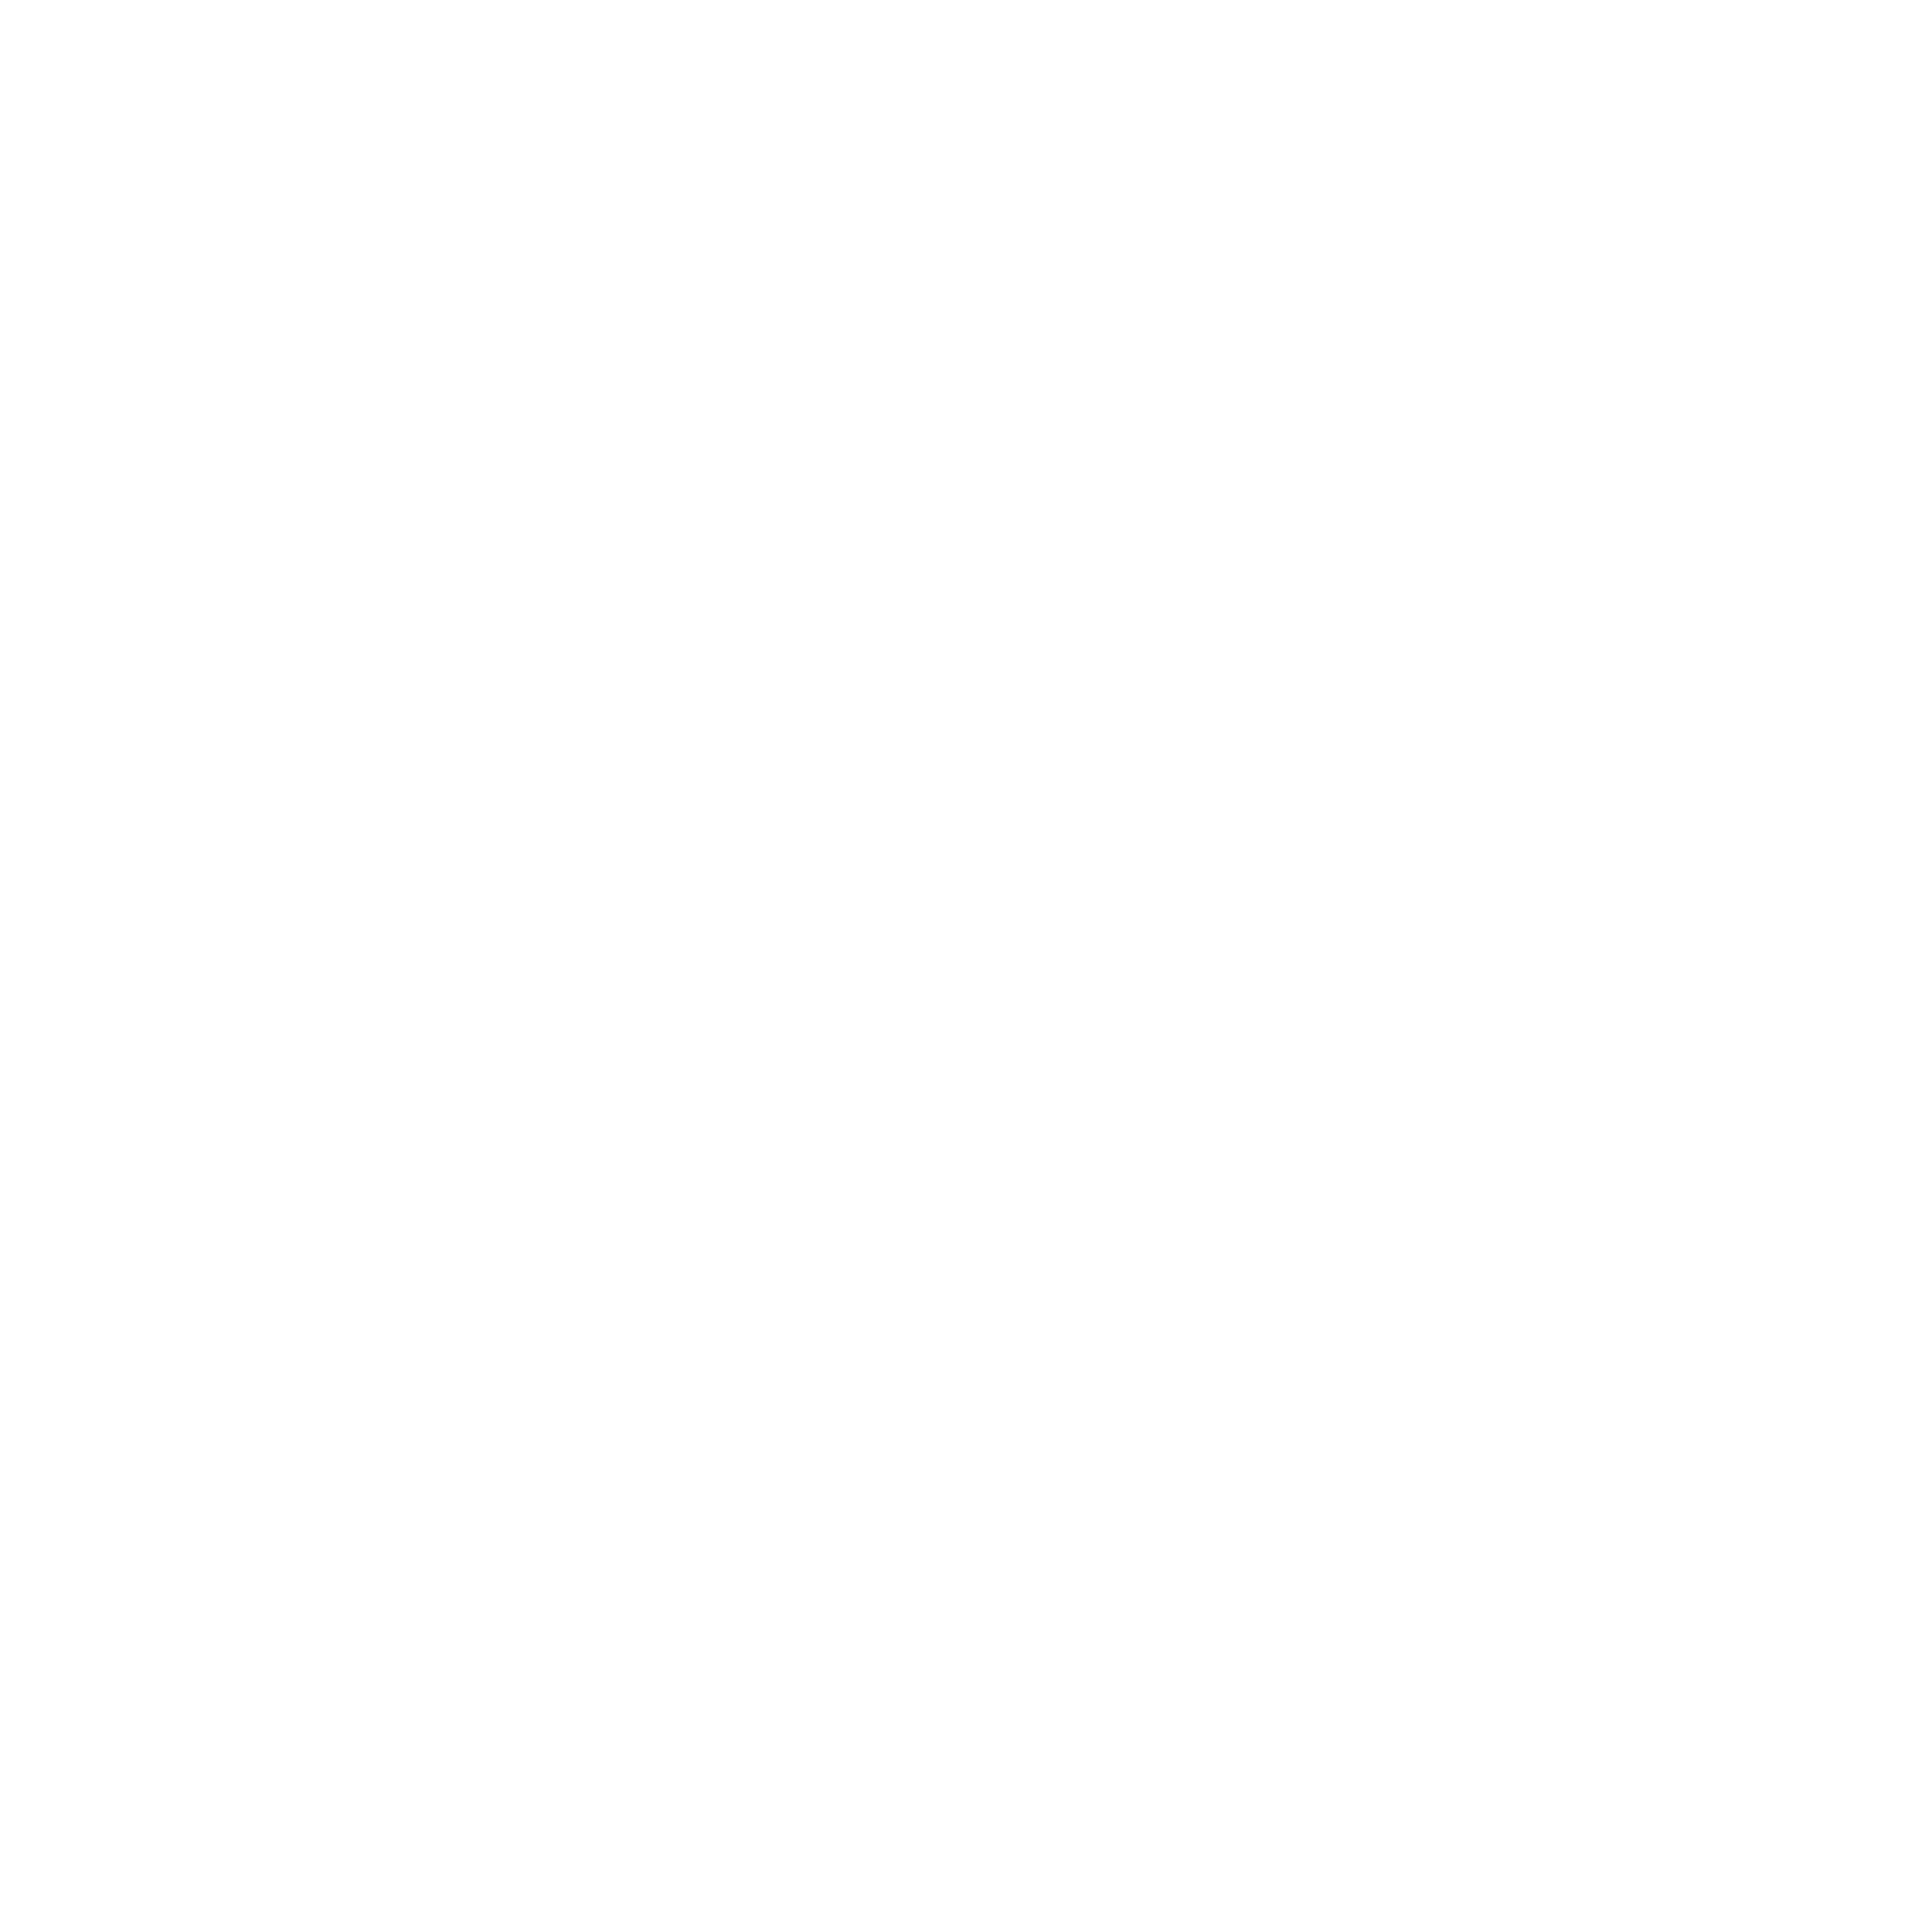 Dolato